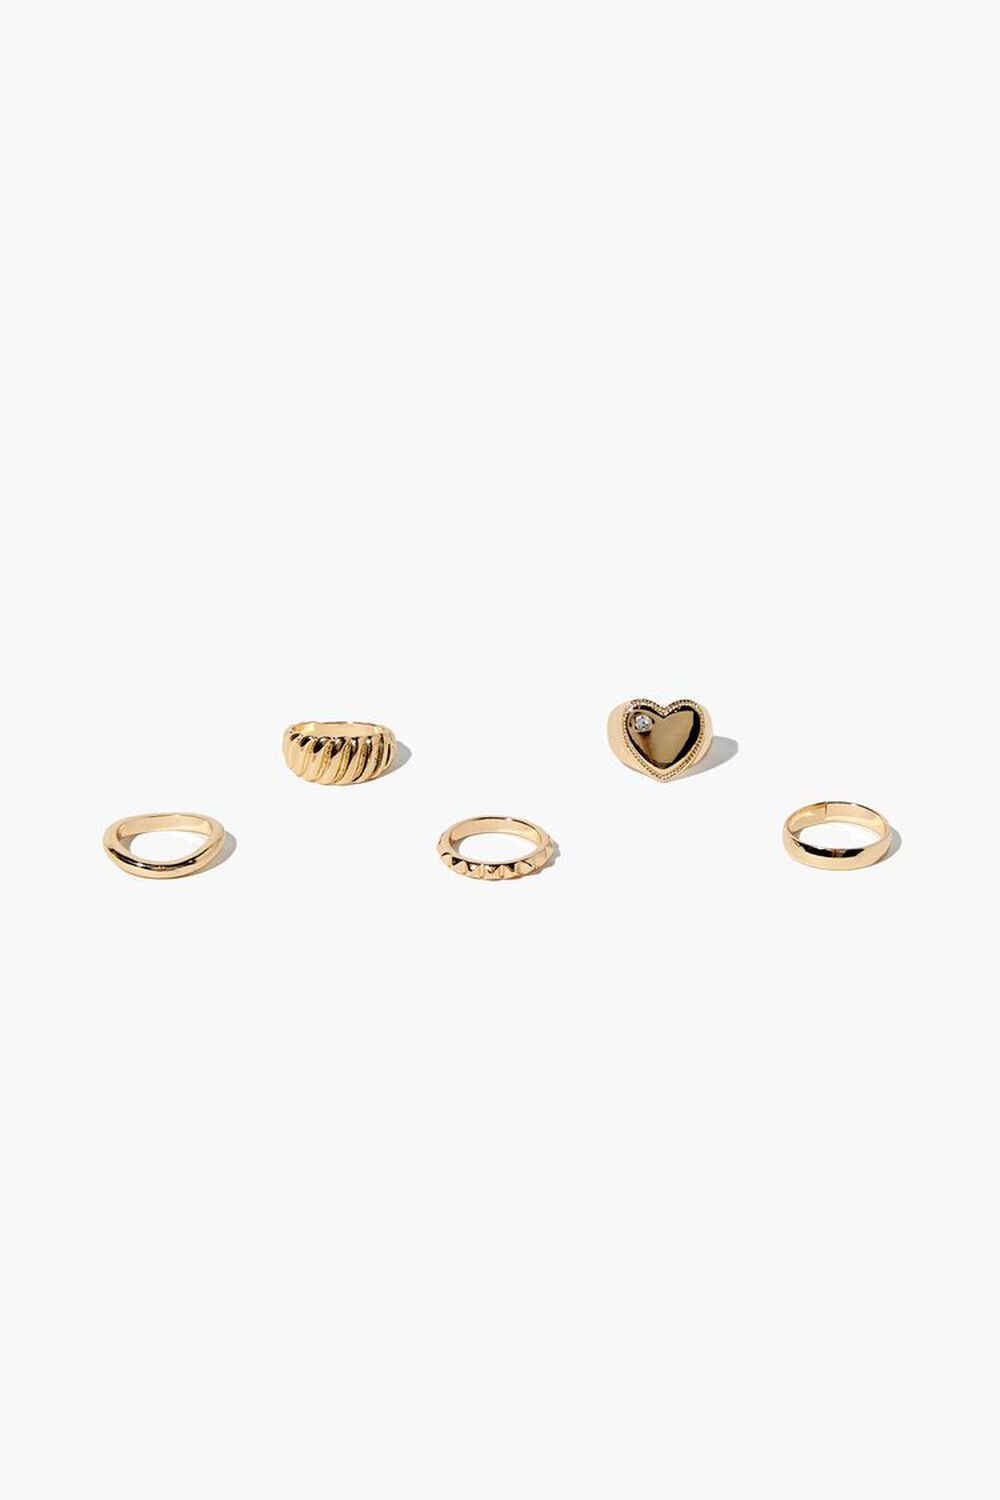 GOLD Upcycled Heart Ring Set, image 1